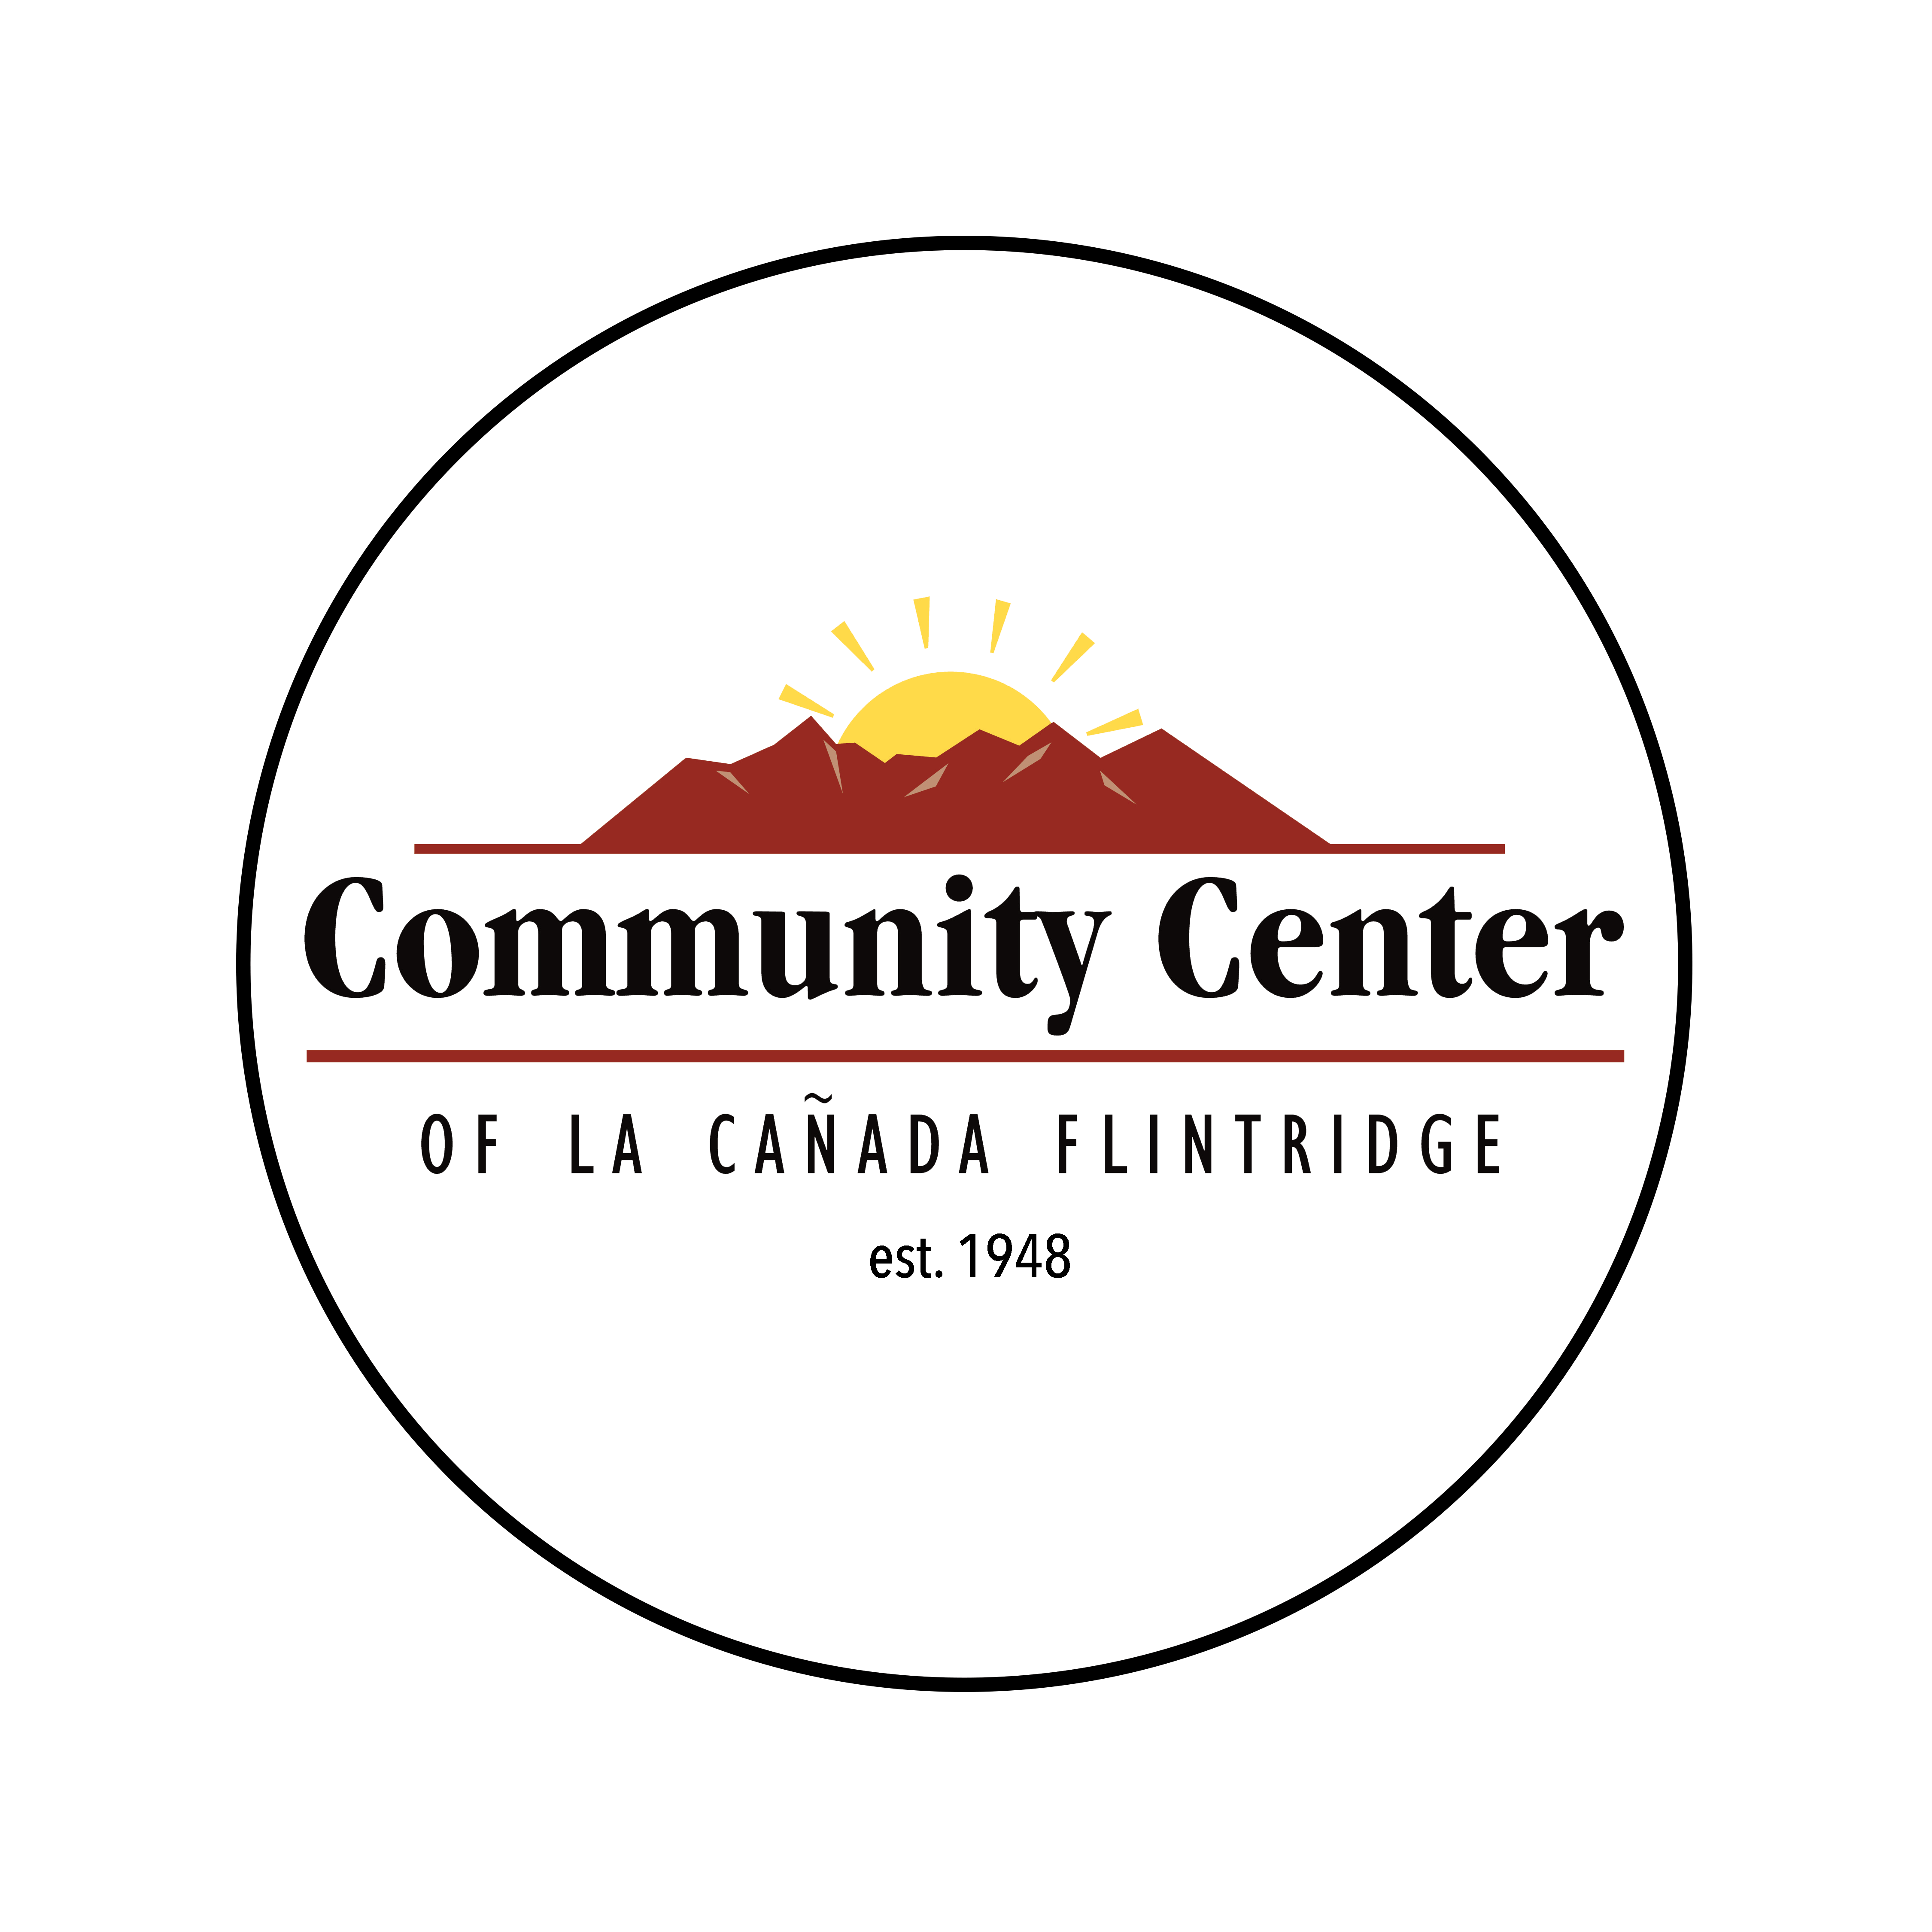 Community Center of La Canada Flintridge